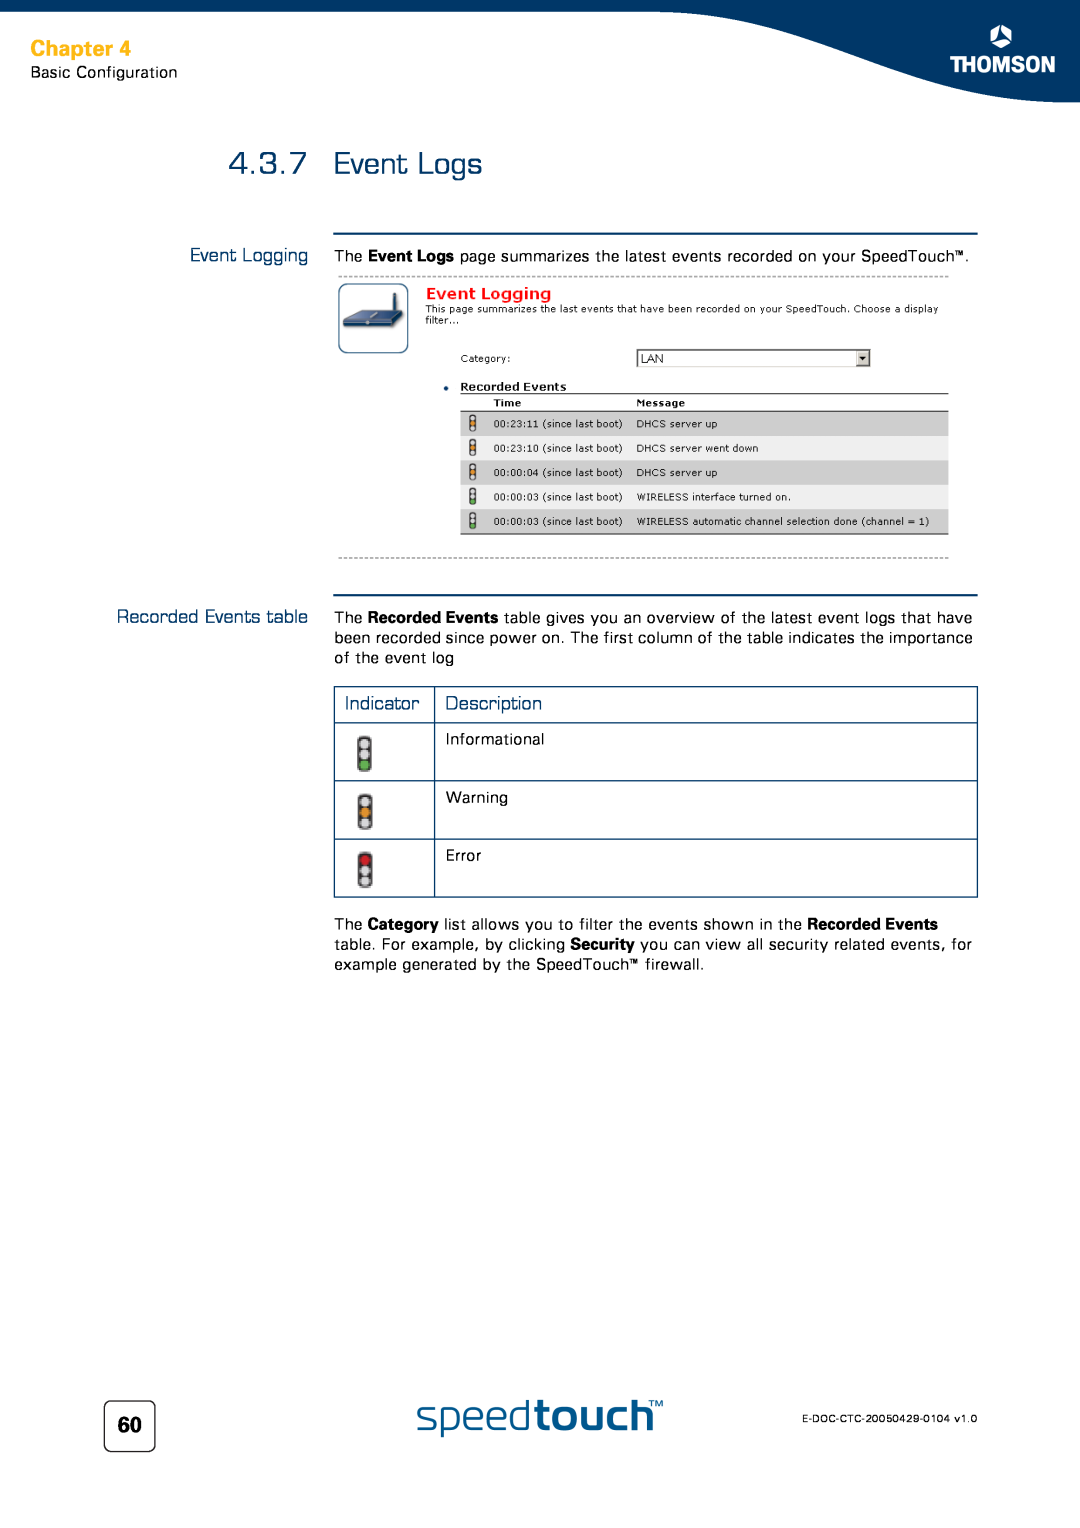 Technicolor - Thomson 608 WL, 620, 605 manual Event Logs, Indicator Description, Chapter 